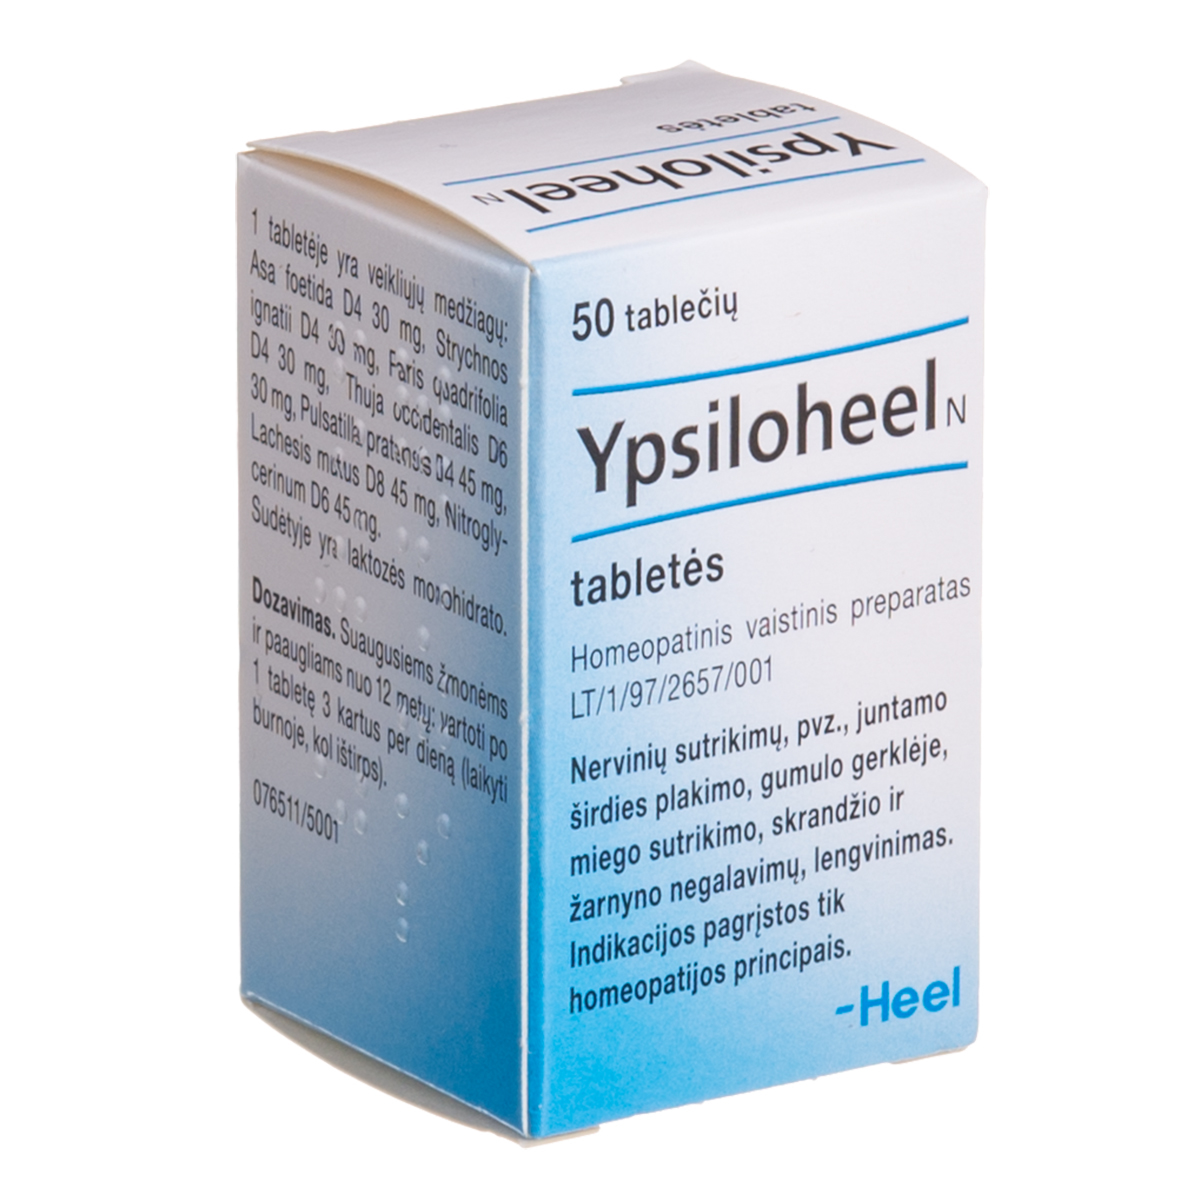 YPSILOHEEL N, tabletės, N50